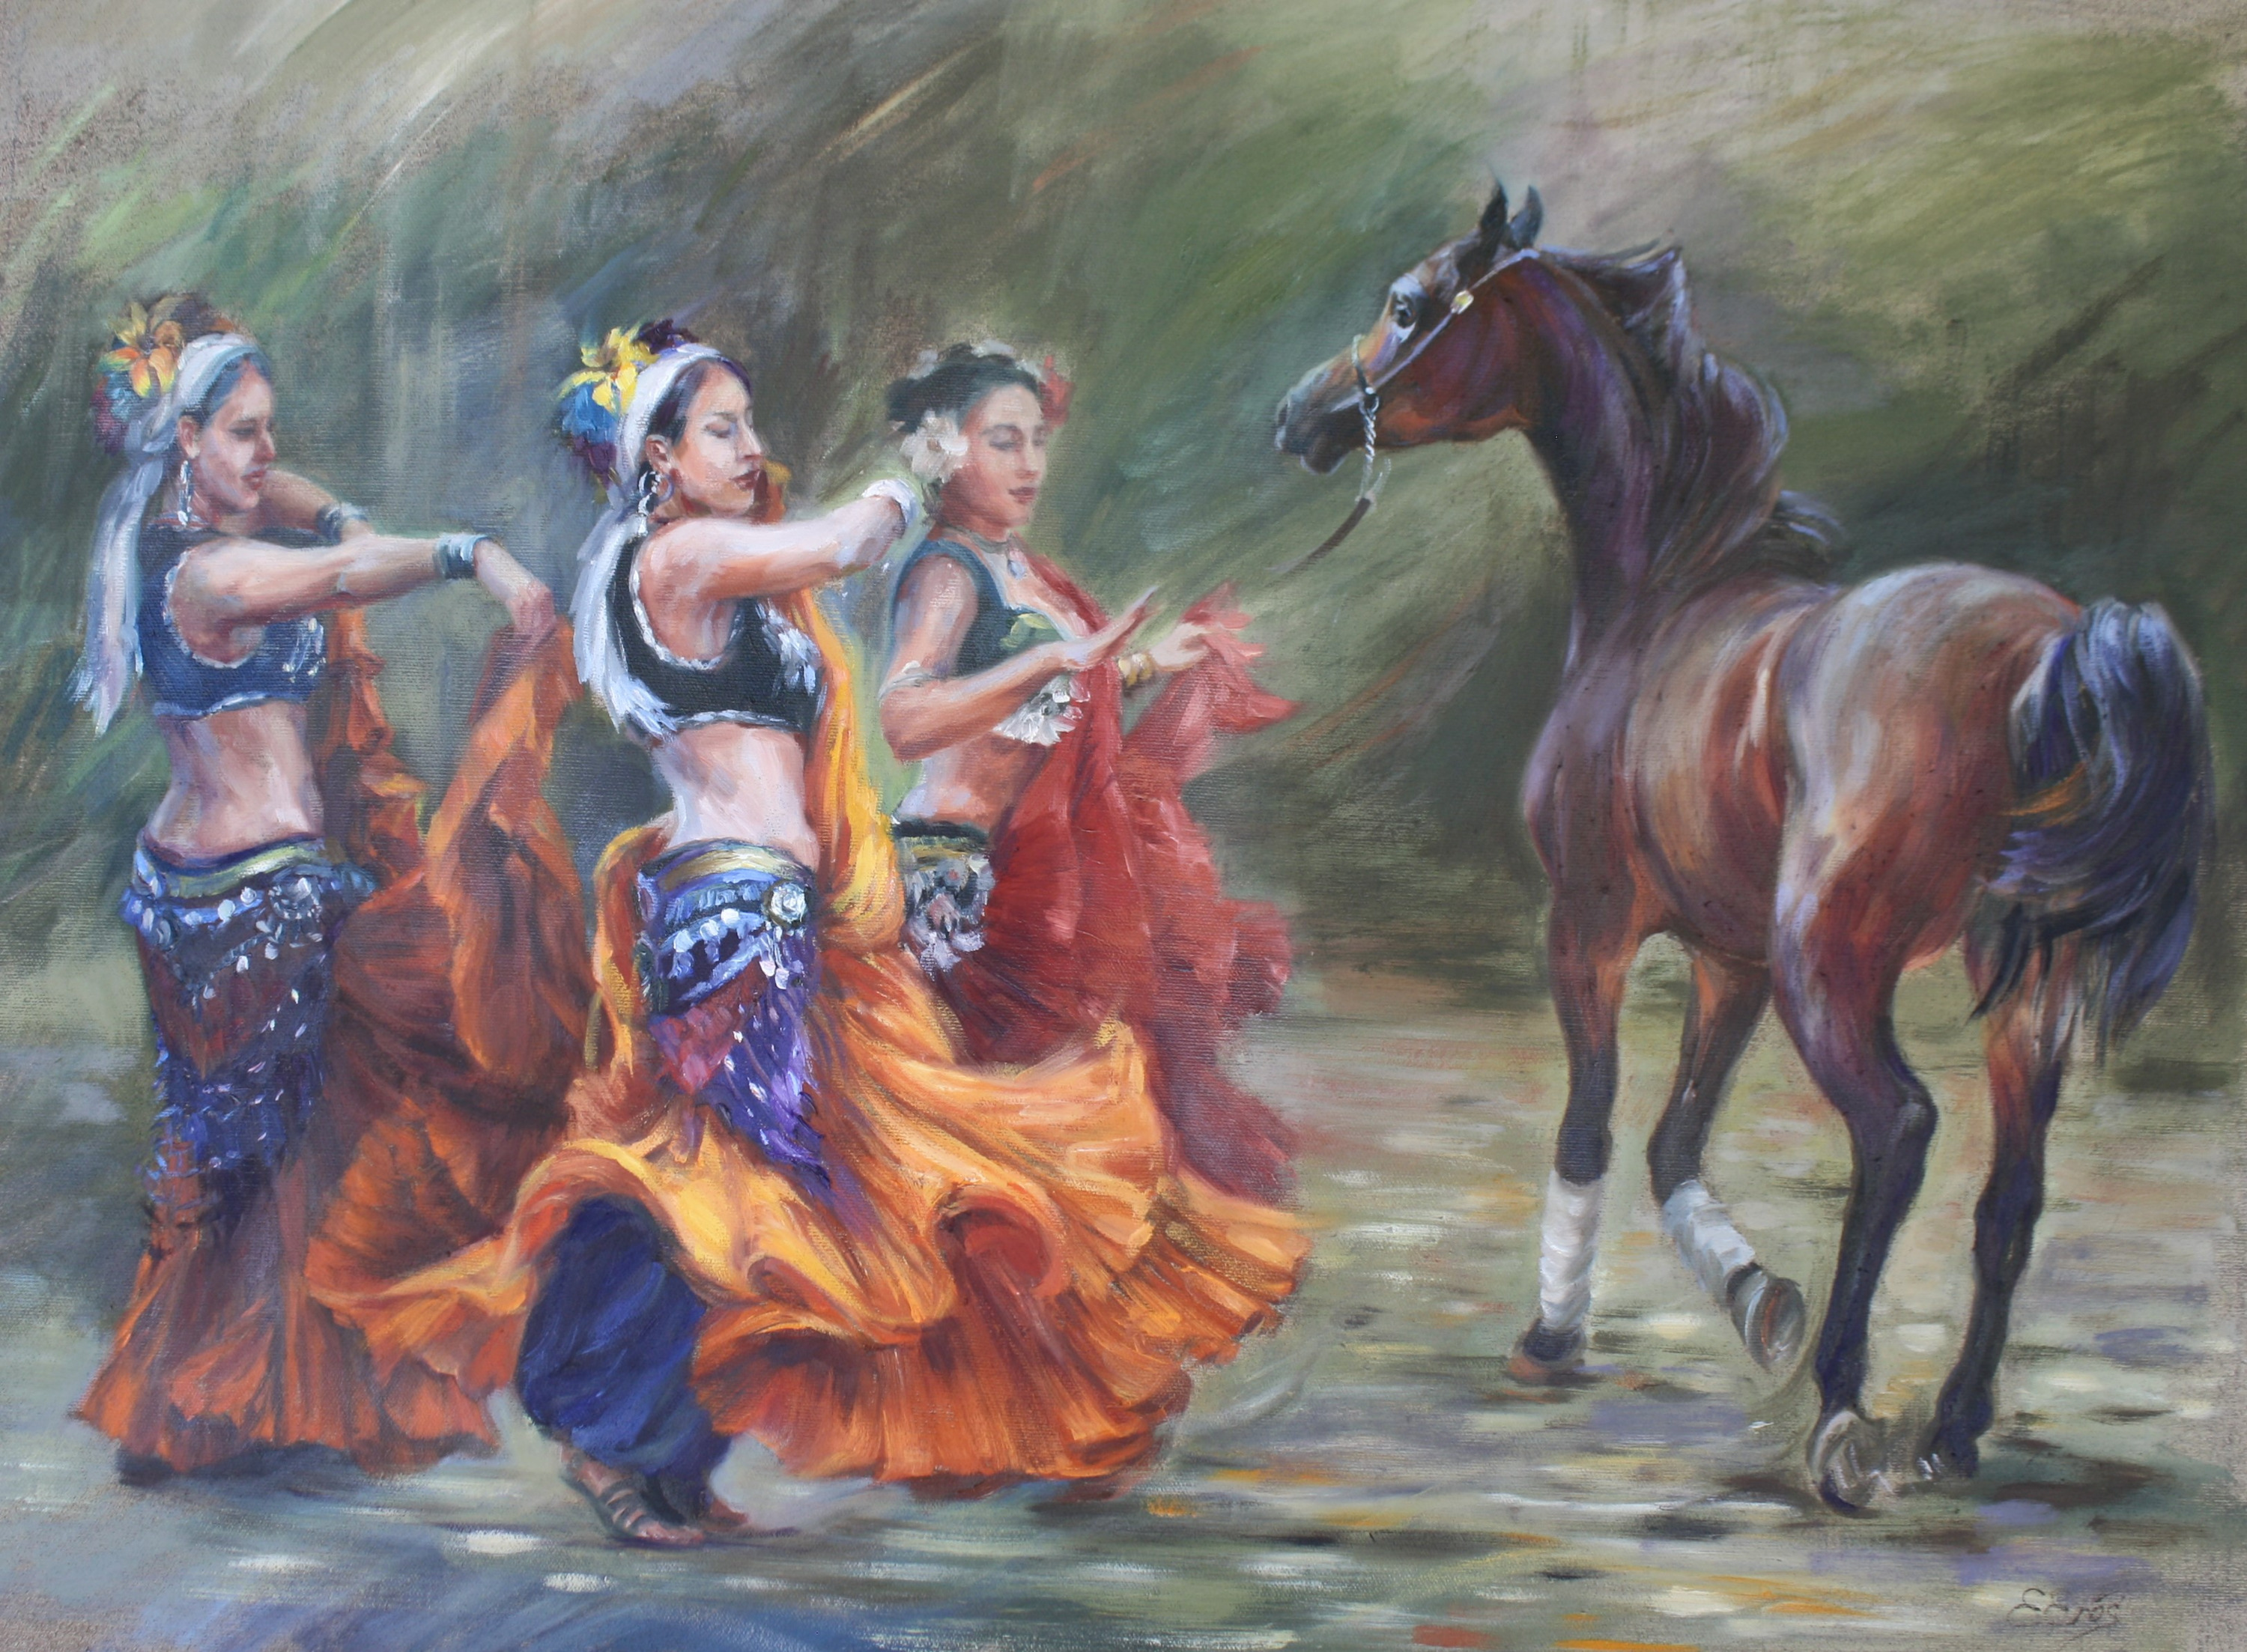 Jelena eros   elena eros rajastan celebration oil on canvas 18x25 3200 ut2ivq